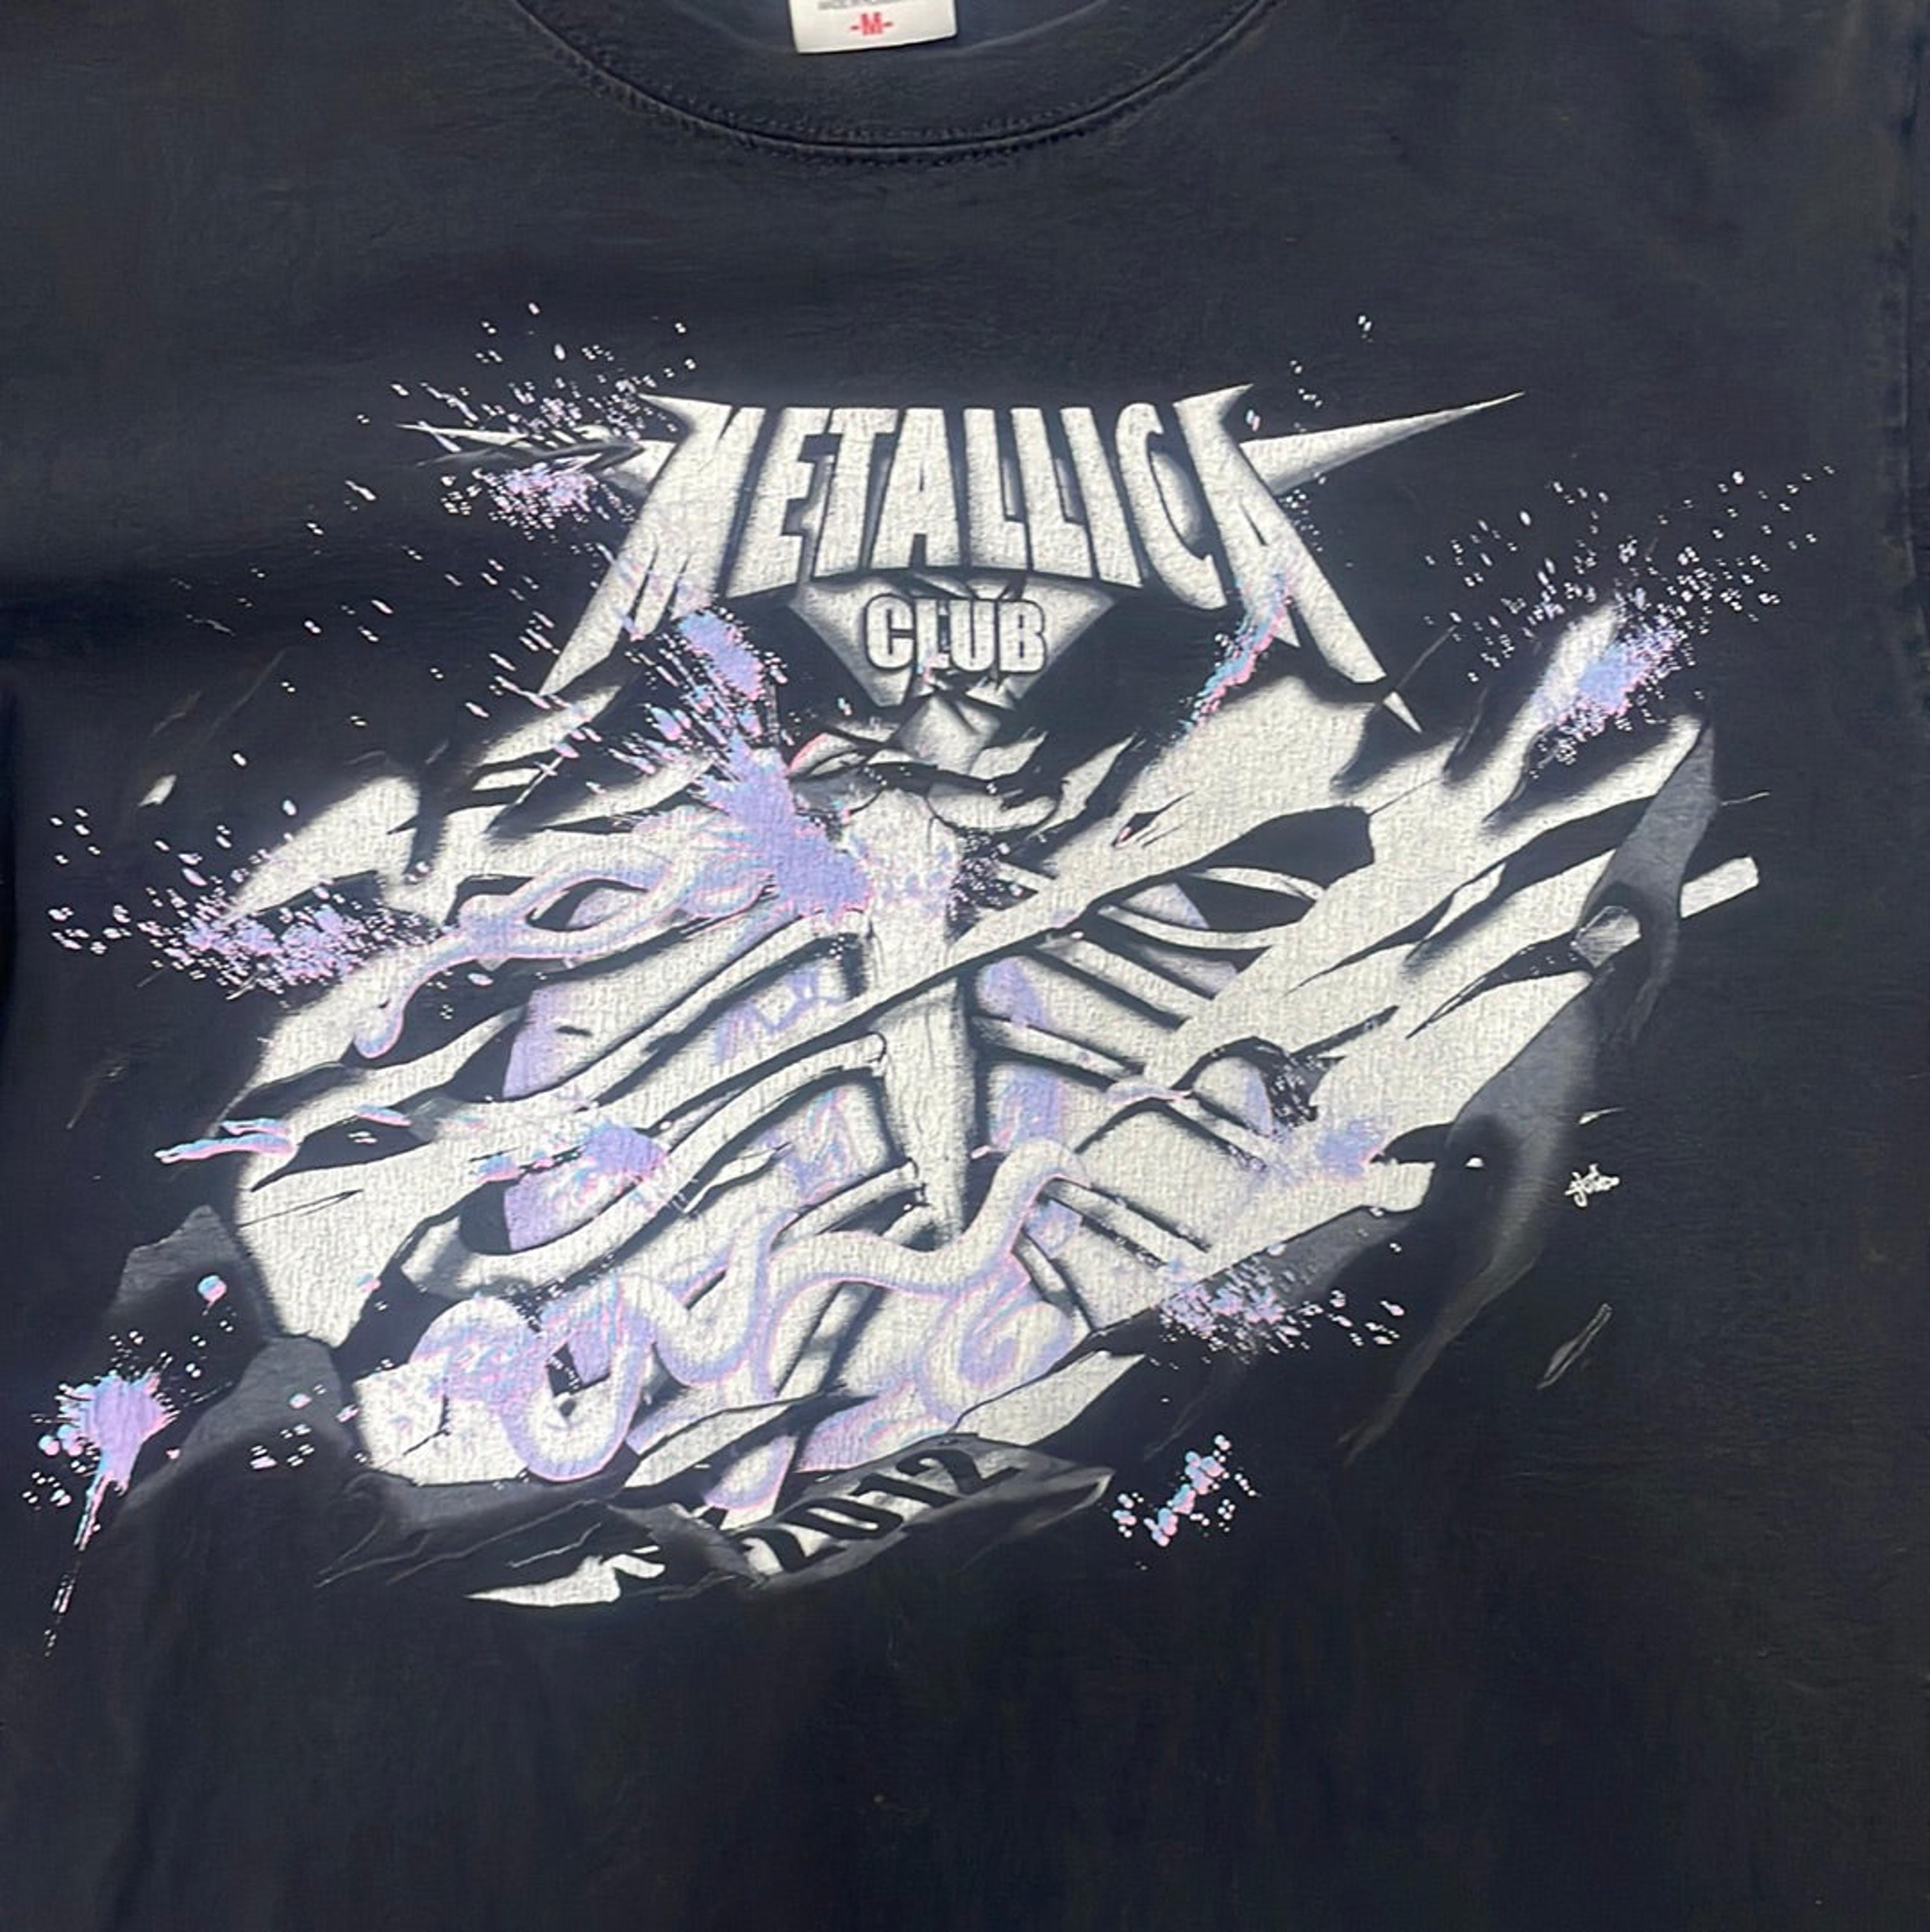 Alternate View 1 of Metallica 2012 Metallica Club Shirt Medium